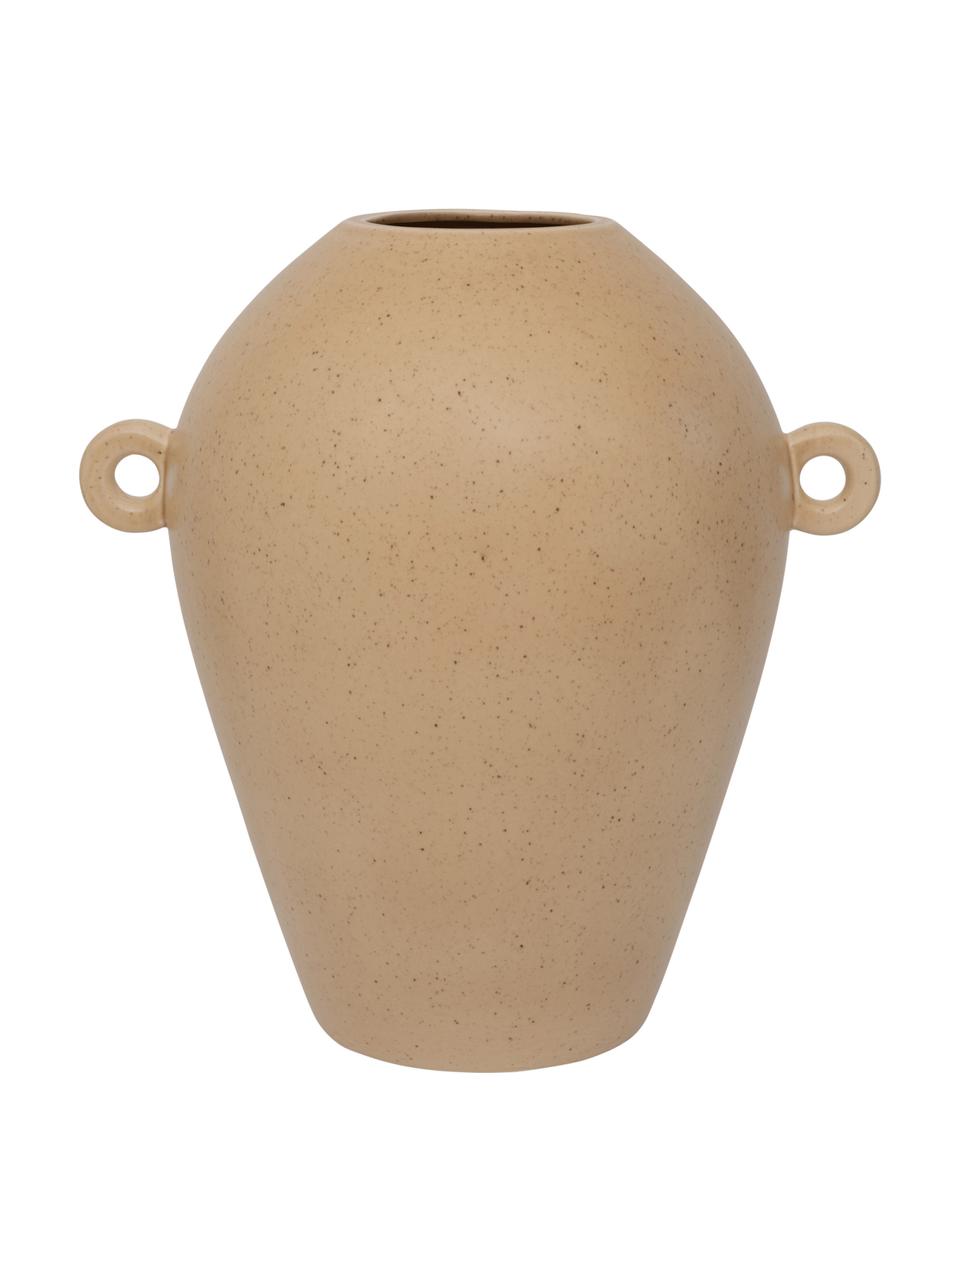 Handgefertigte Keramik-Vase Quiet in Beige, Keramik, Beige, B 29 x H 30 cm